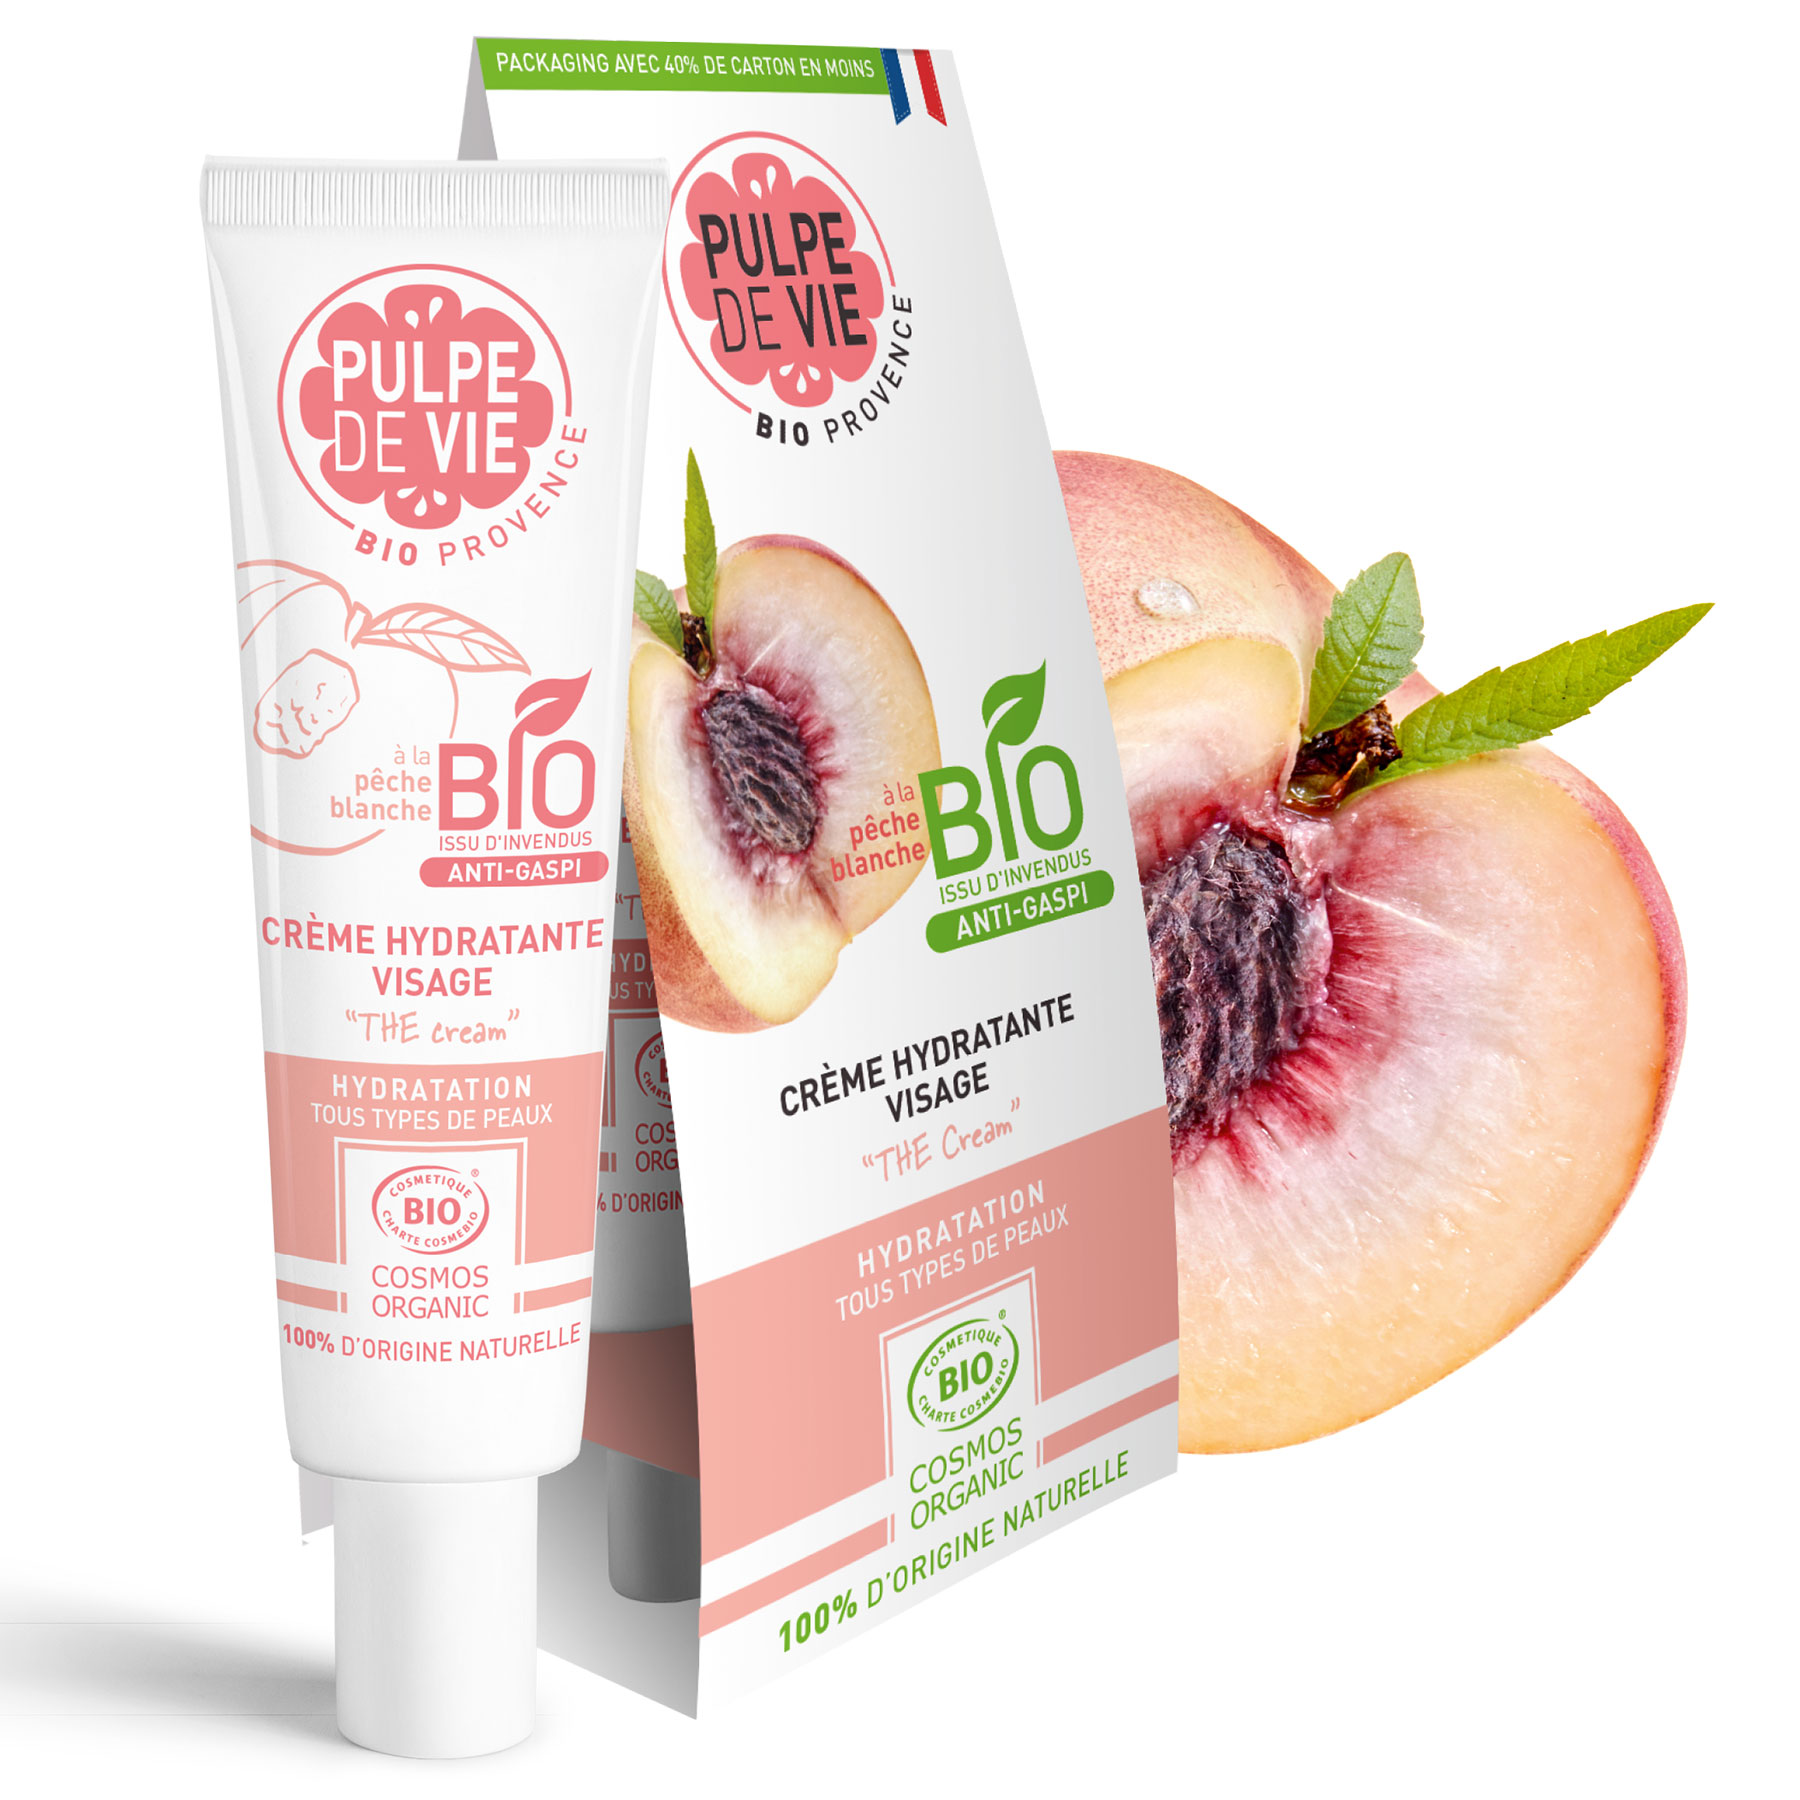 Crème hydratante visage Bio The Cream de Pulpe de Vie - Tube et packaging